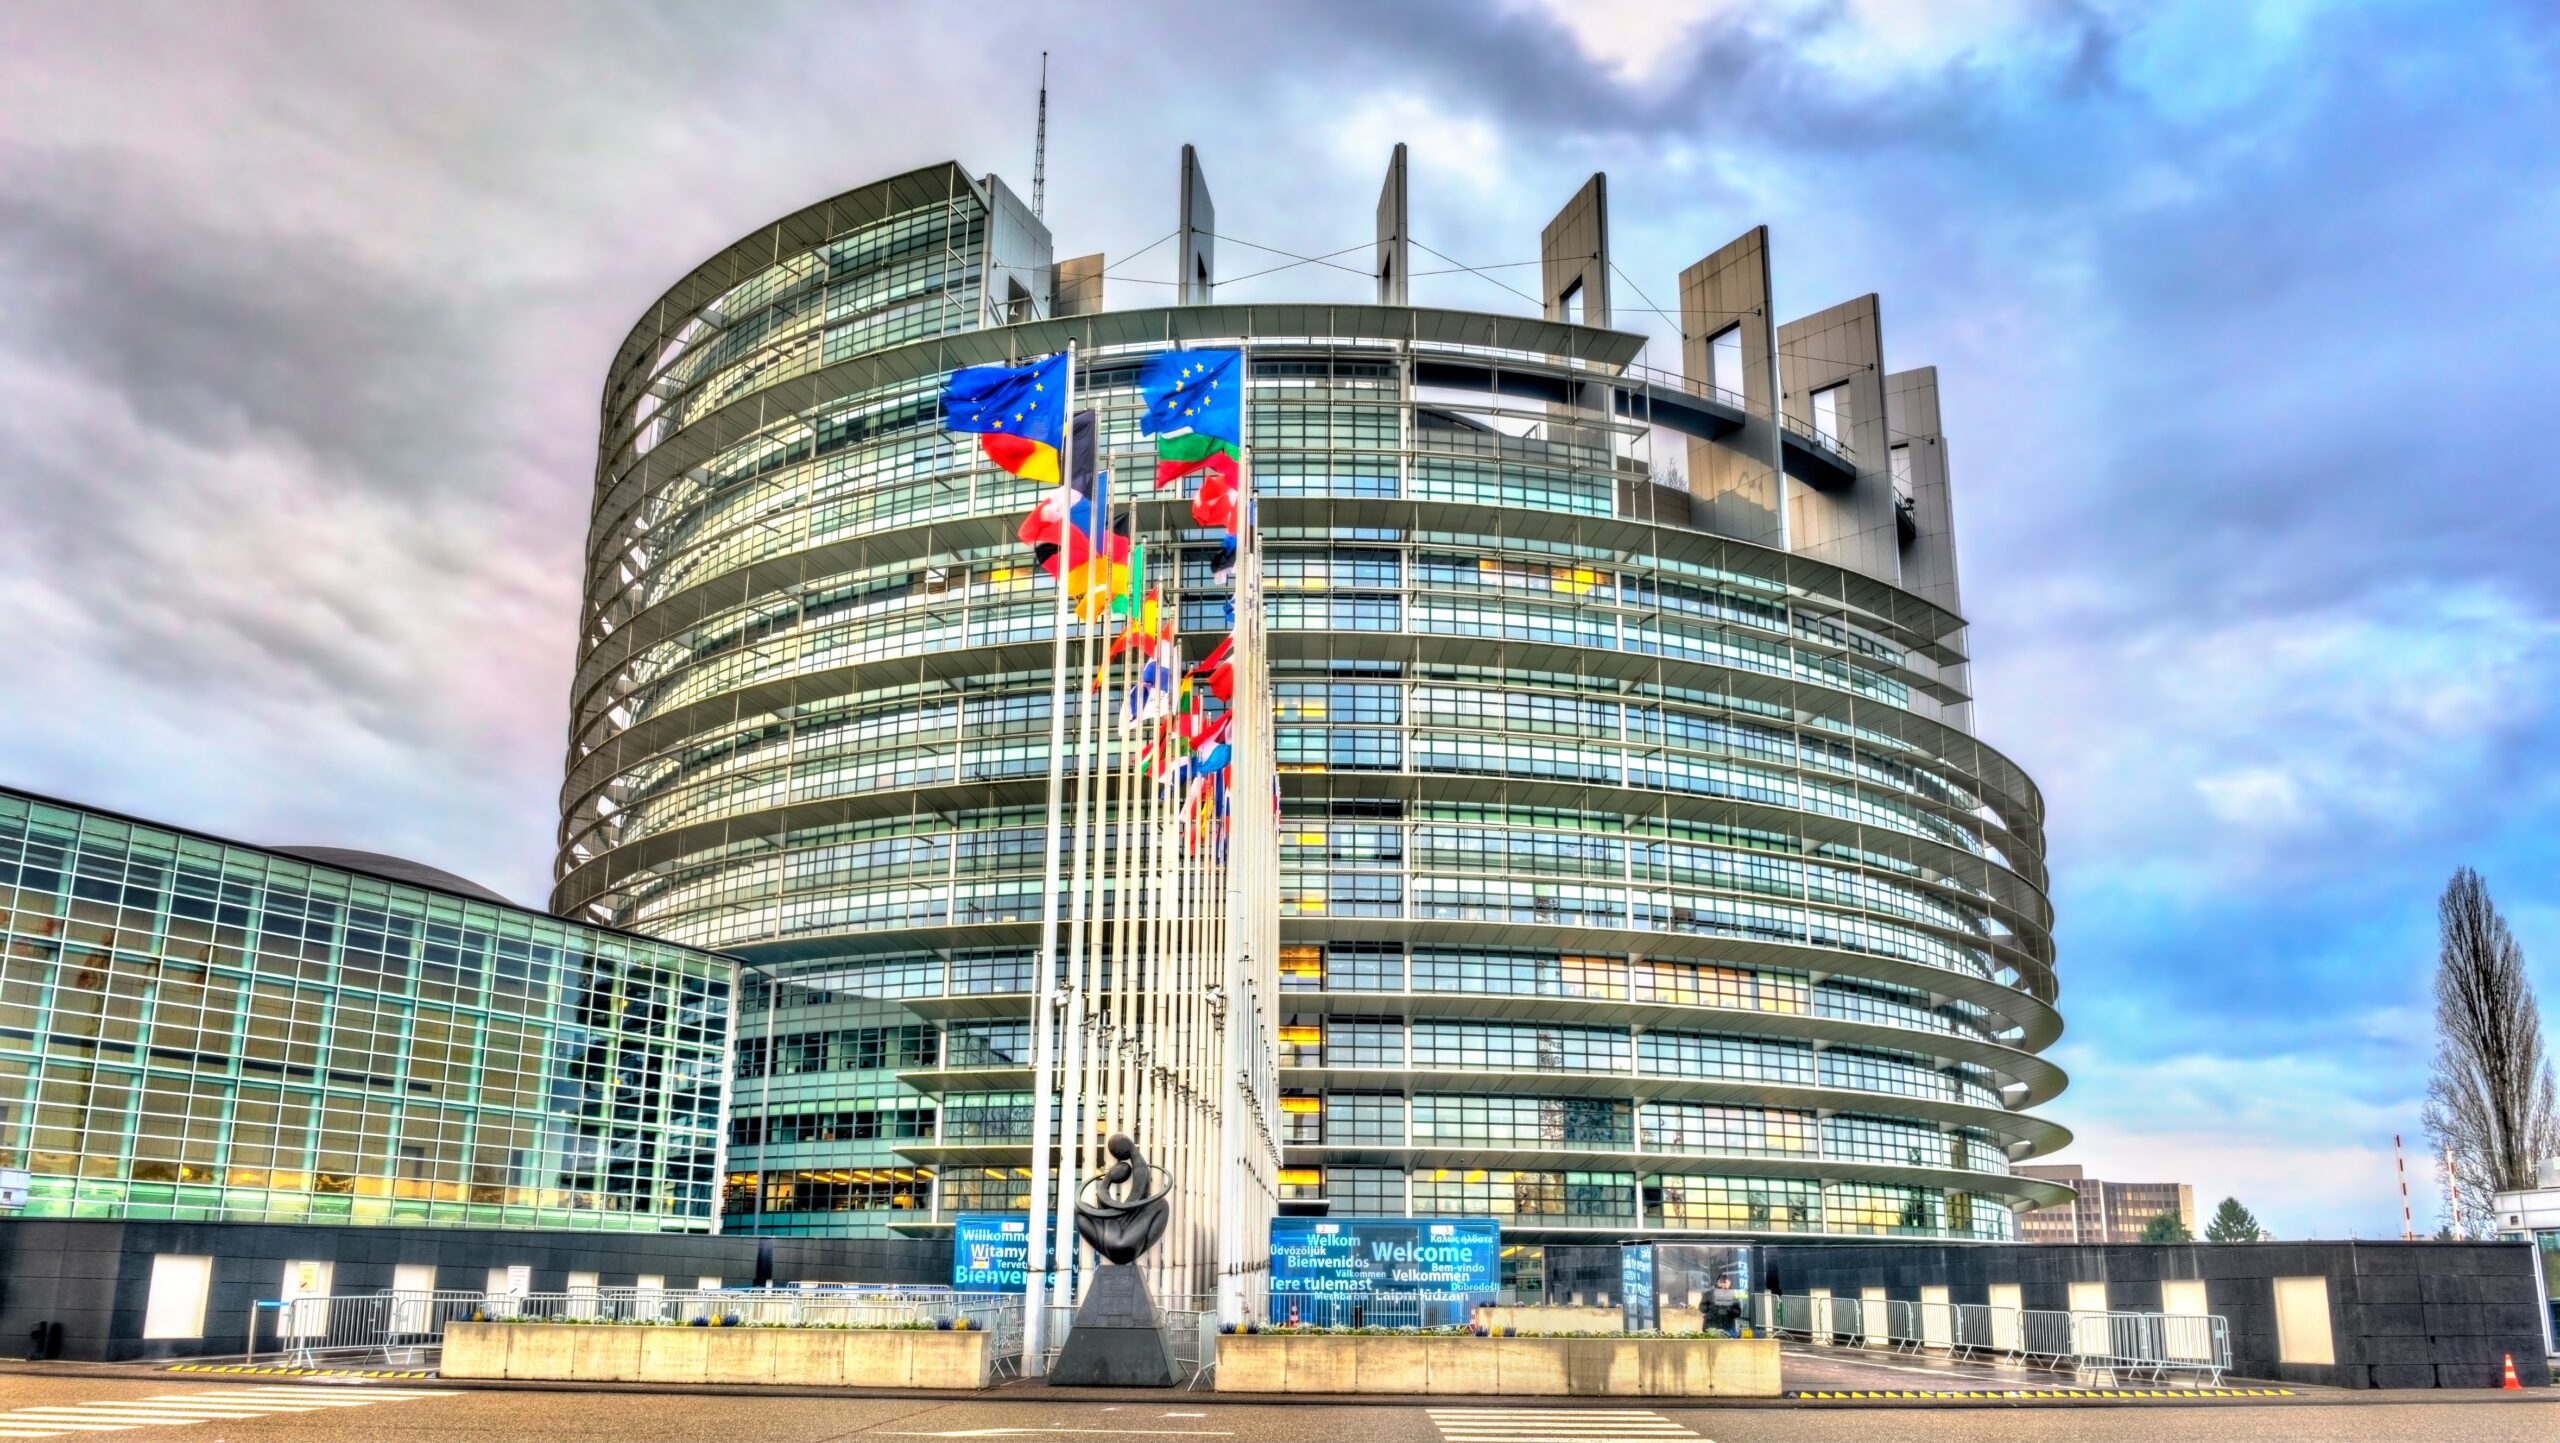 Voľby do Európskeho parlamentu